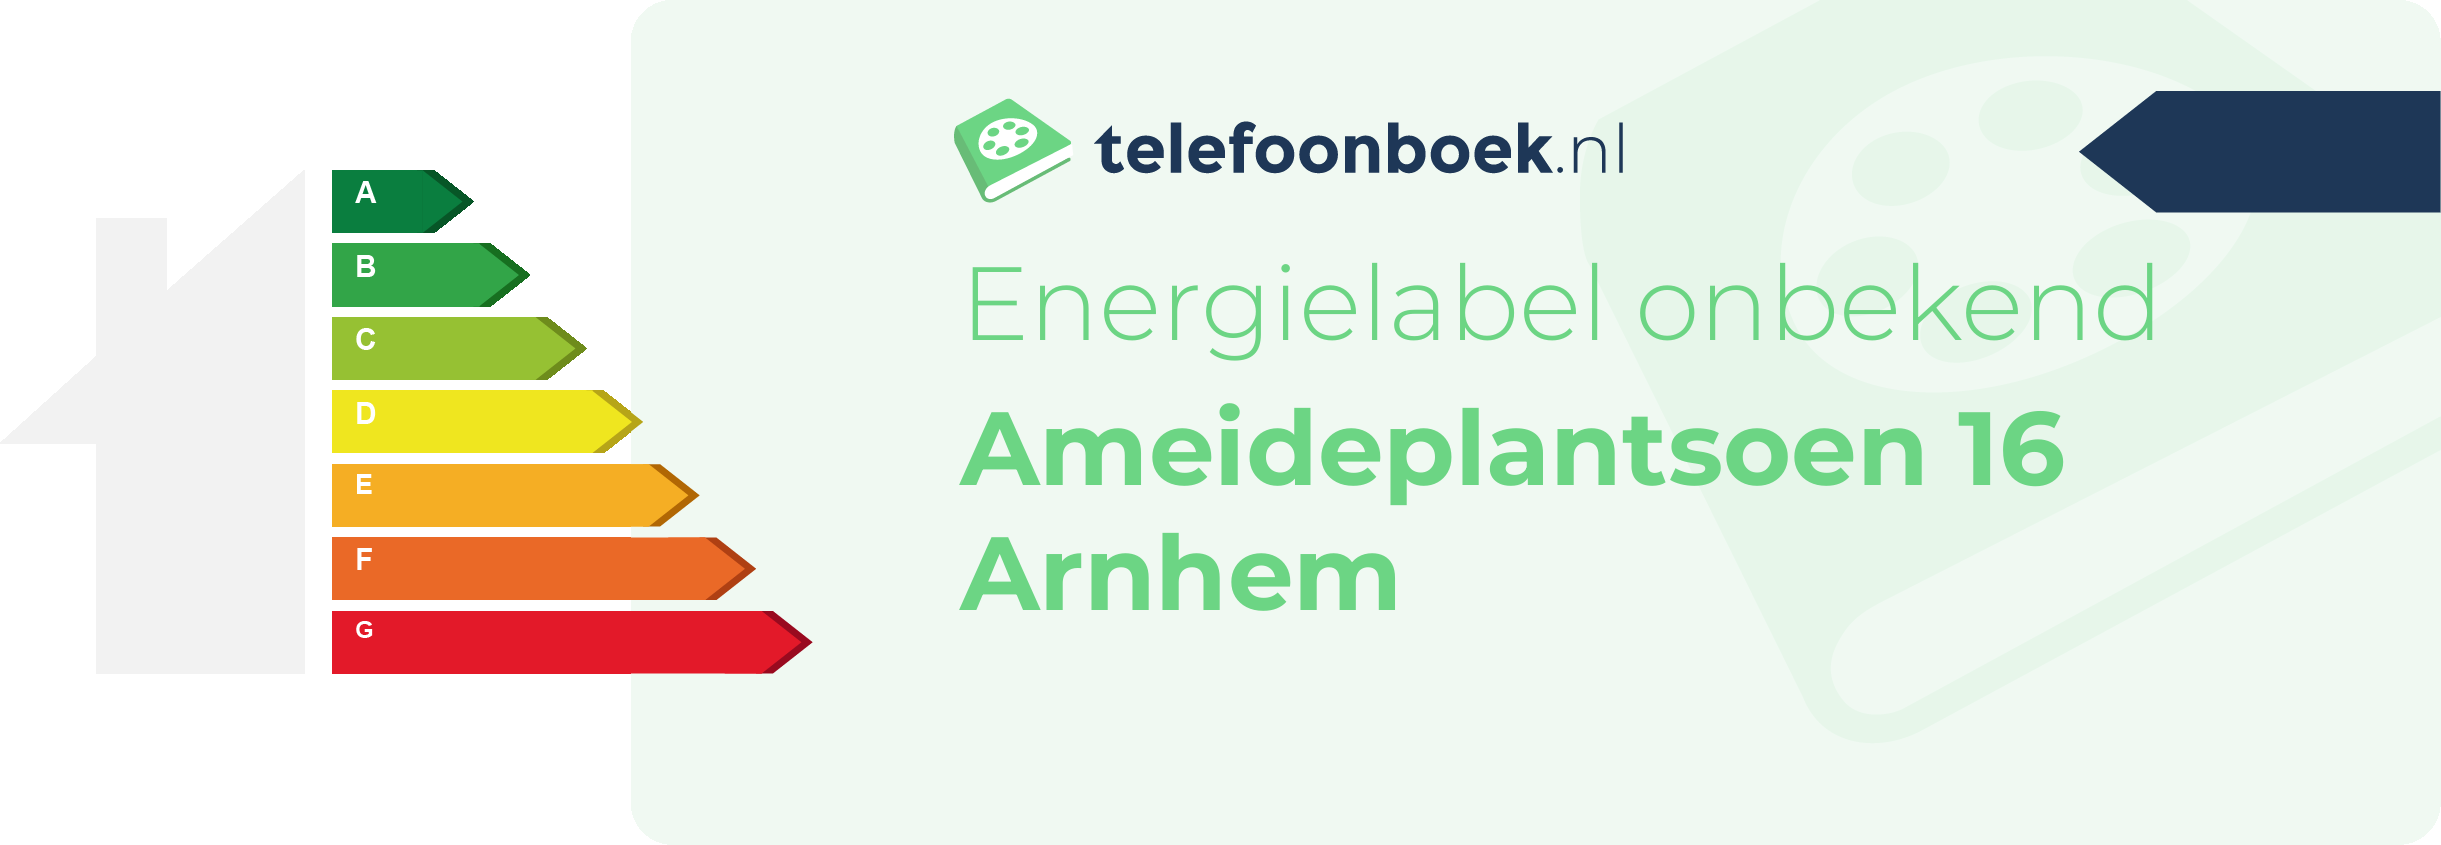 Energielabel Ameideplantsoen 16 Arnhem